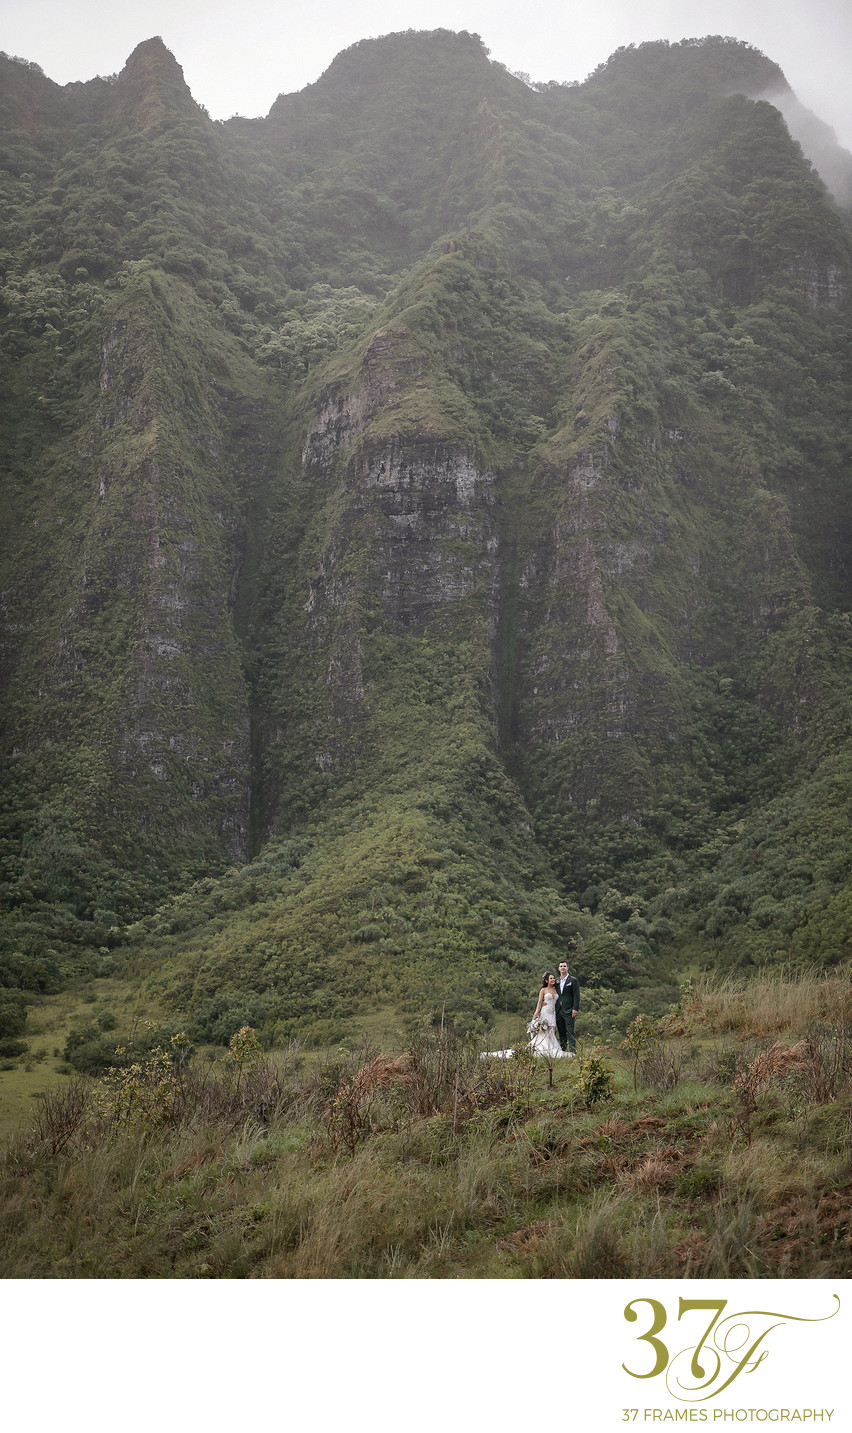 Most scenic wedding venues in Hawaii